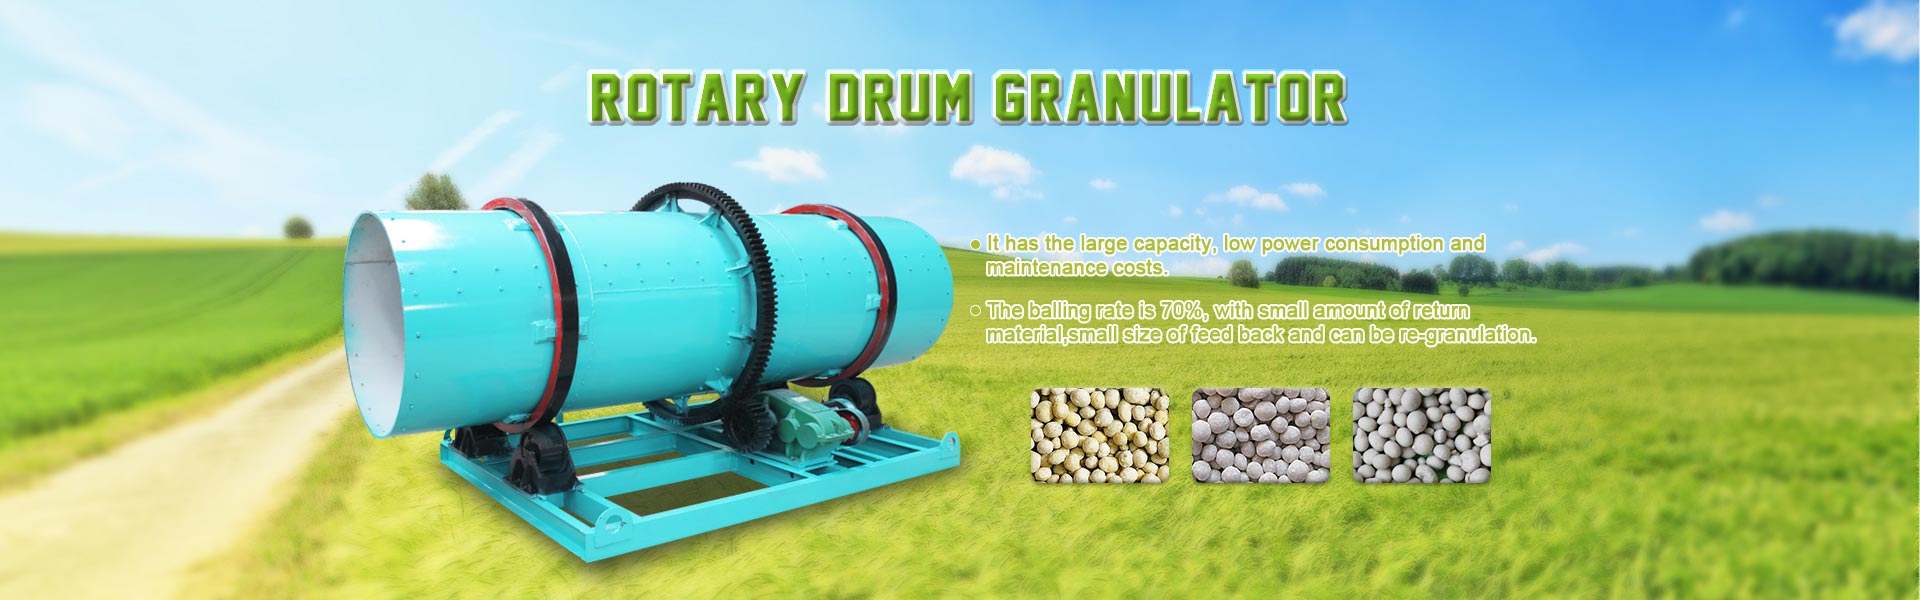 Rotary Drum Granulator